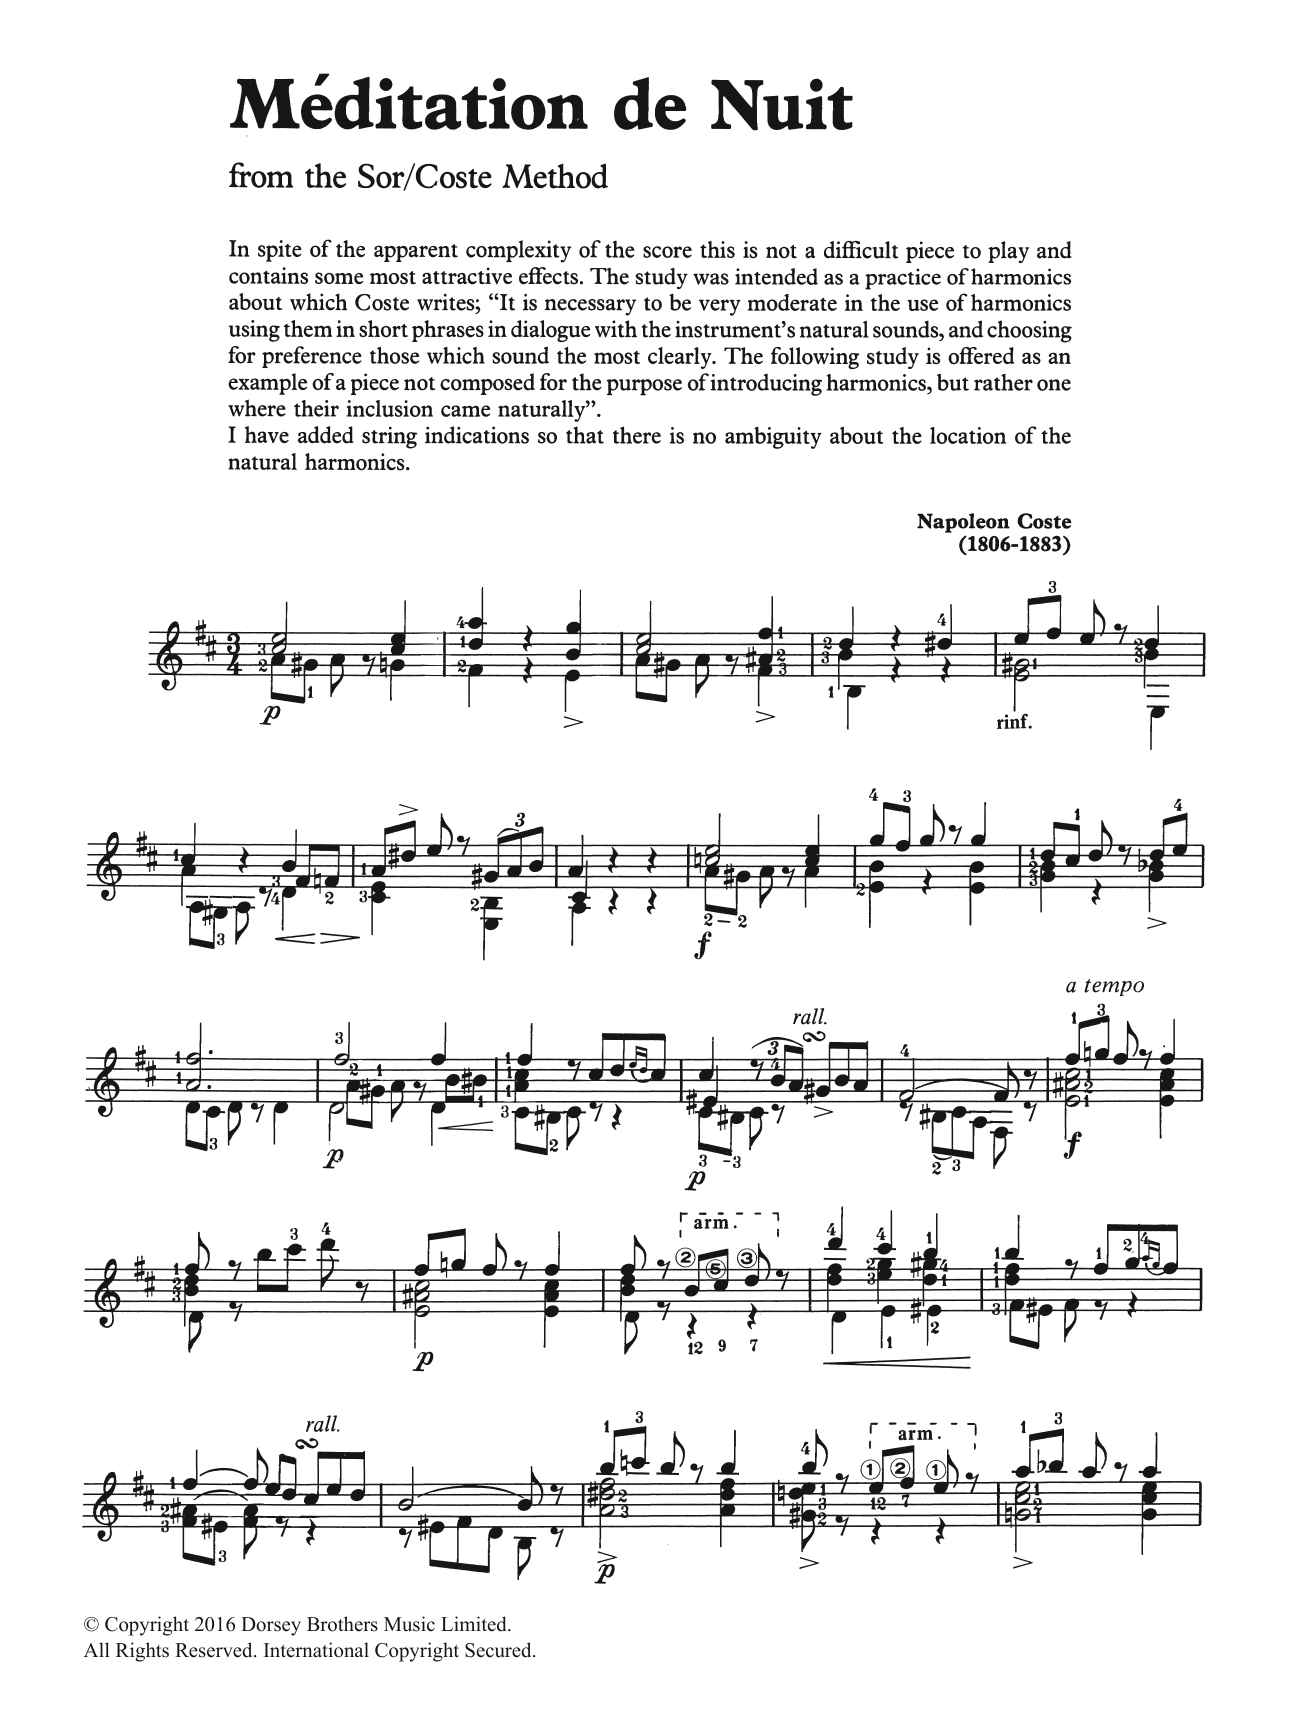 Napoleon Coste Meditation De Nuit Sheet Music Notes & Chords for Guitar - Download or Print PDF